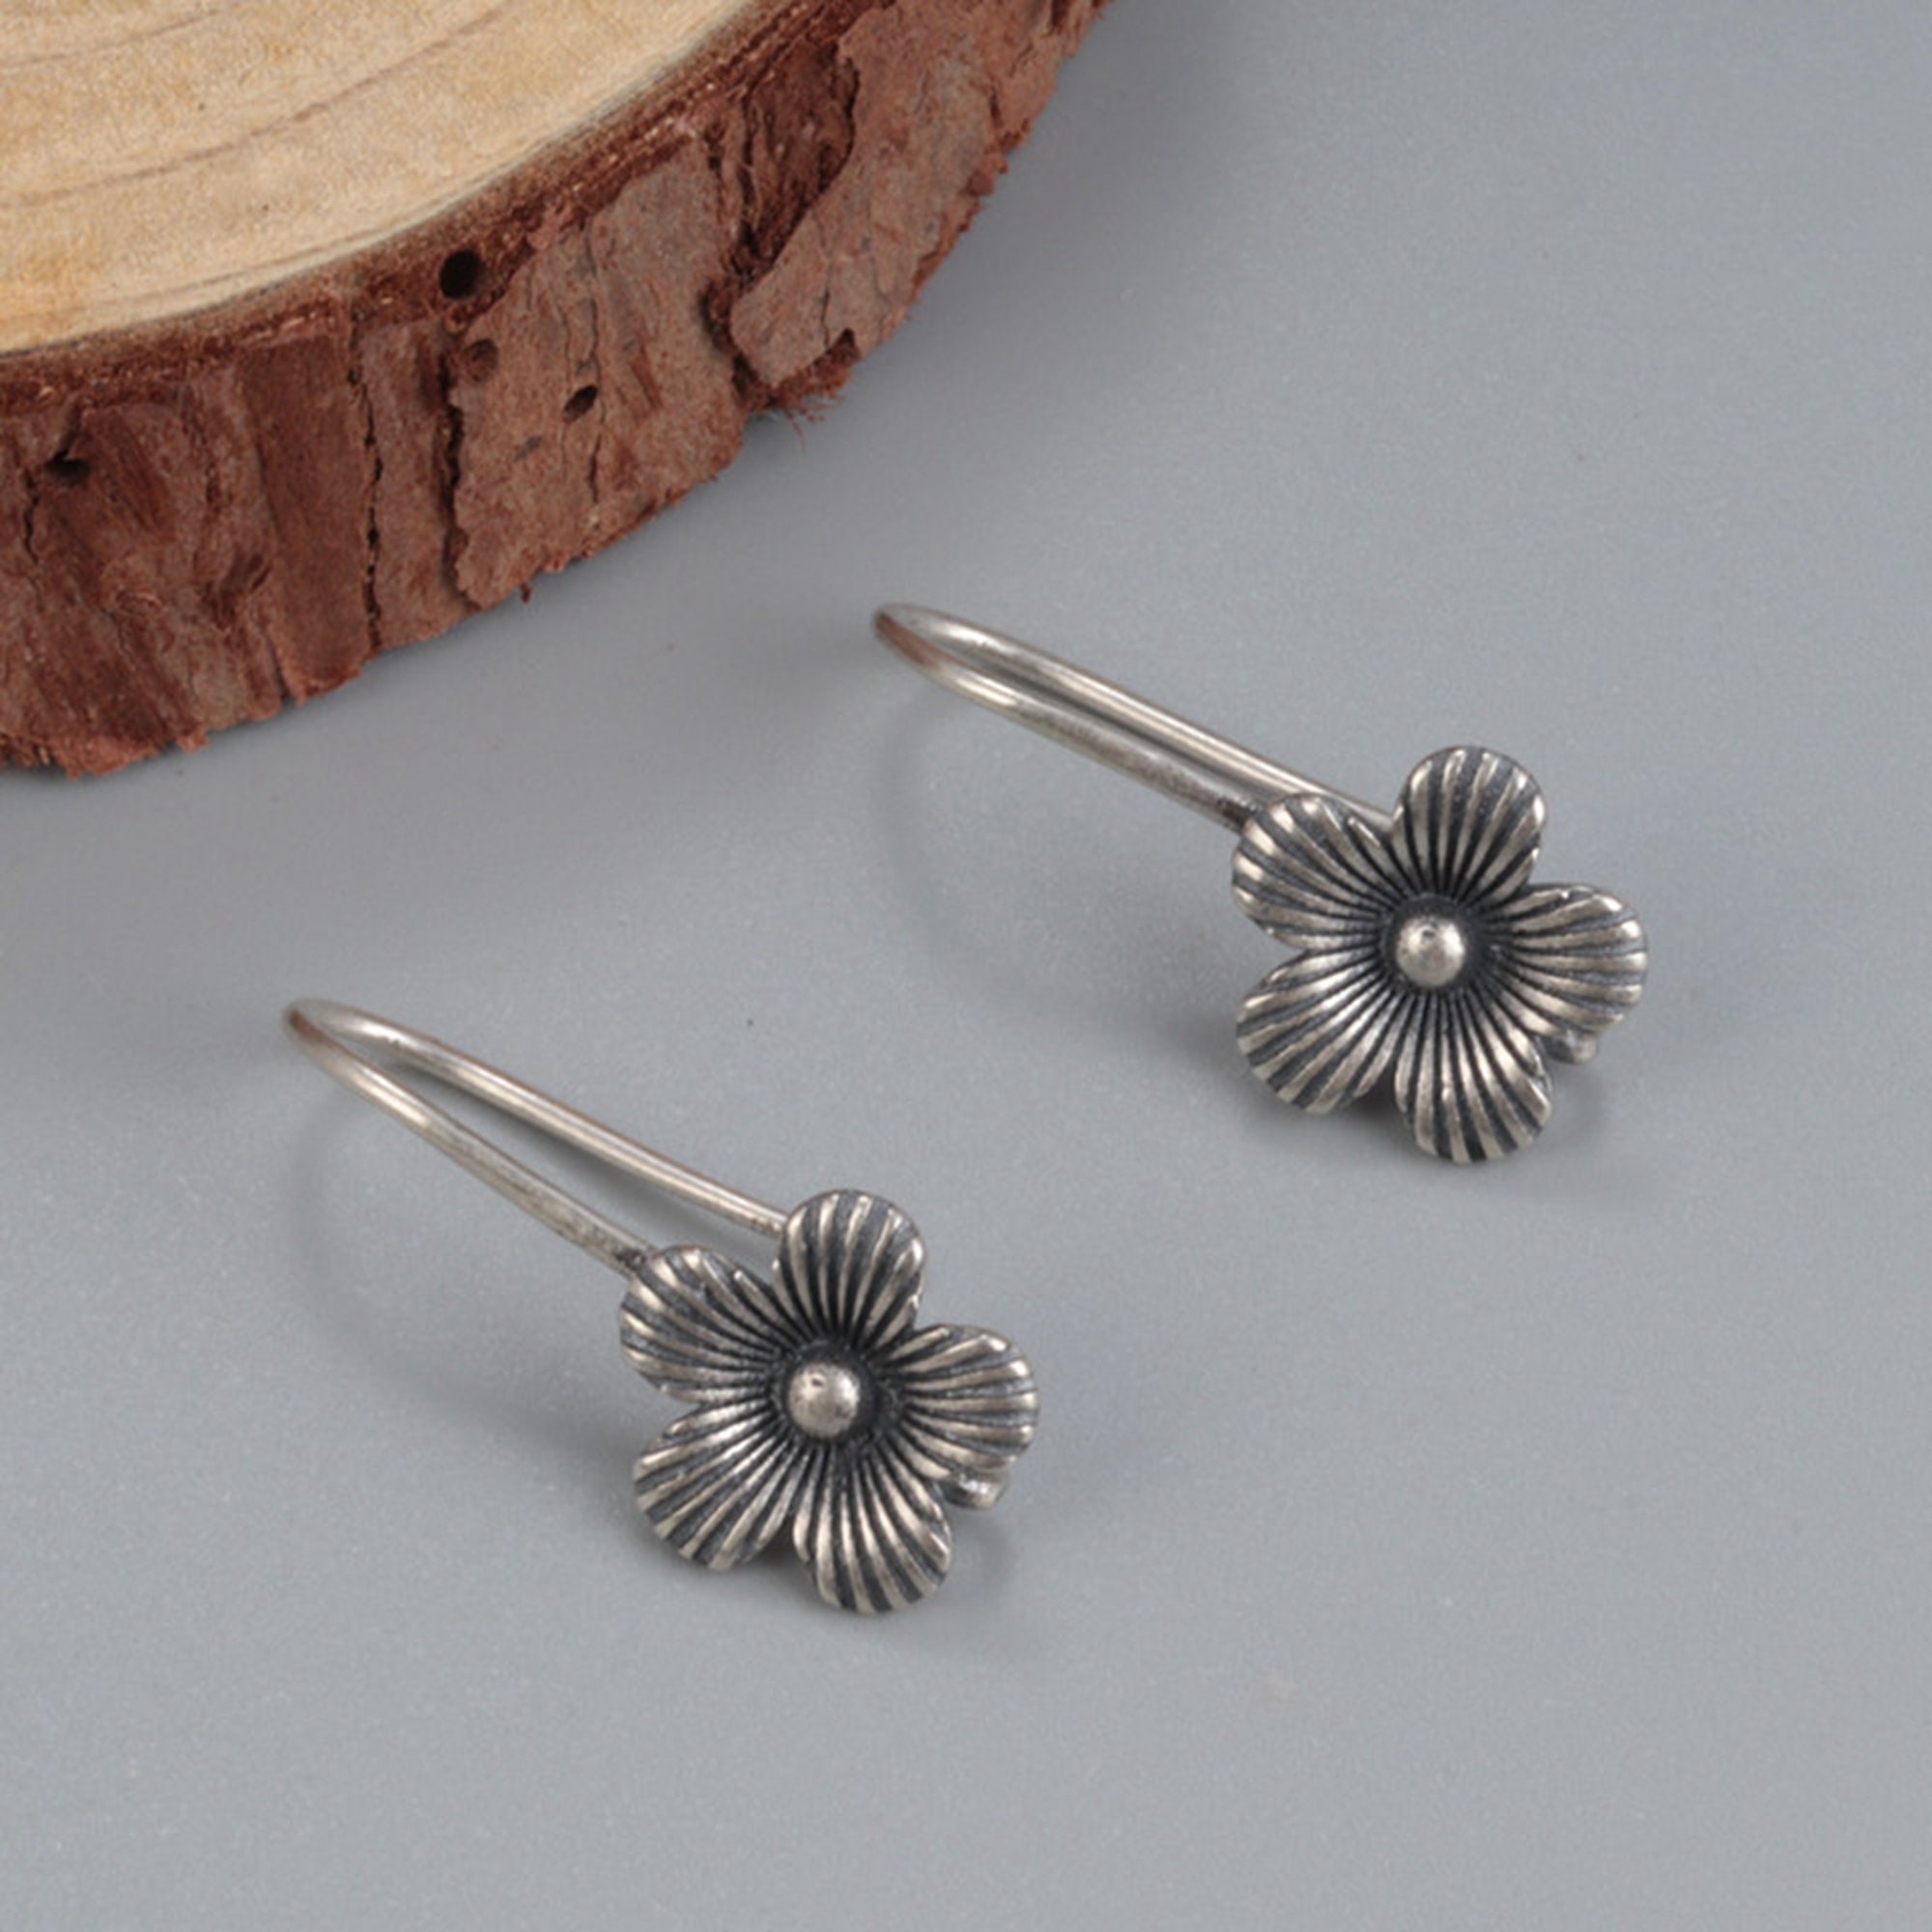 Silver Earring Hooks, S925 Silver Earring Hooks for Jewelry Making